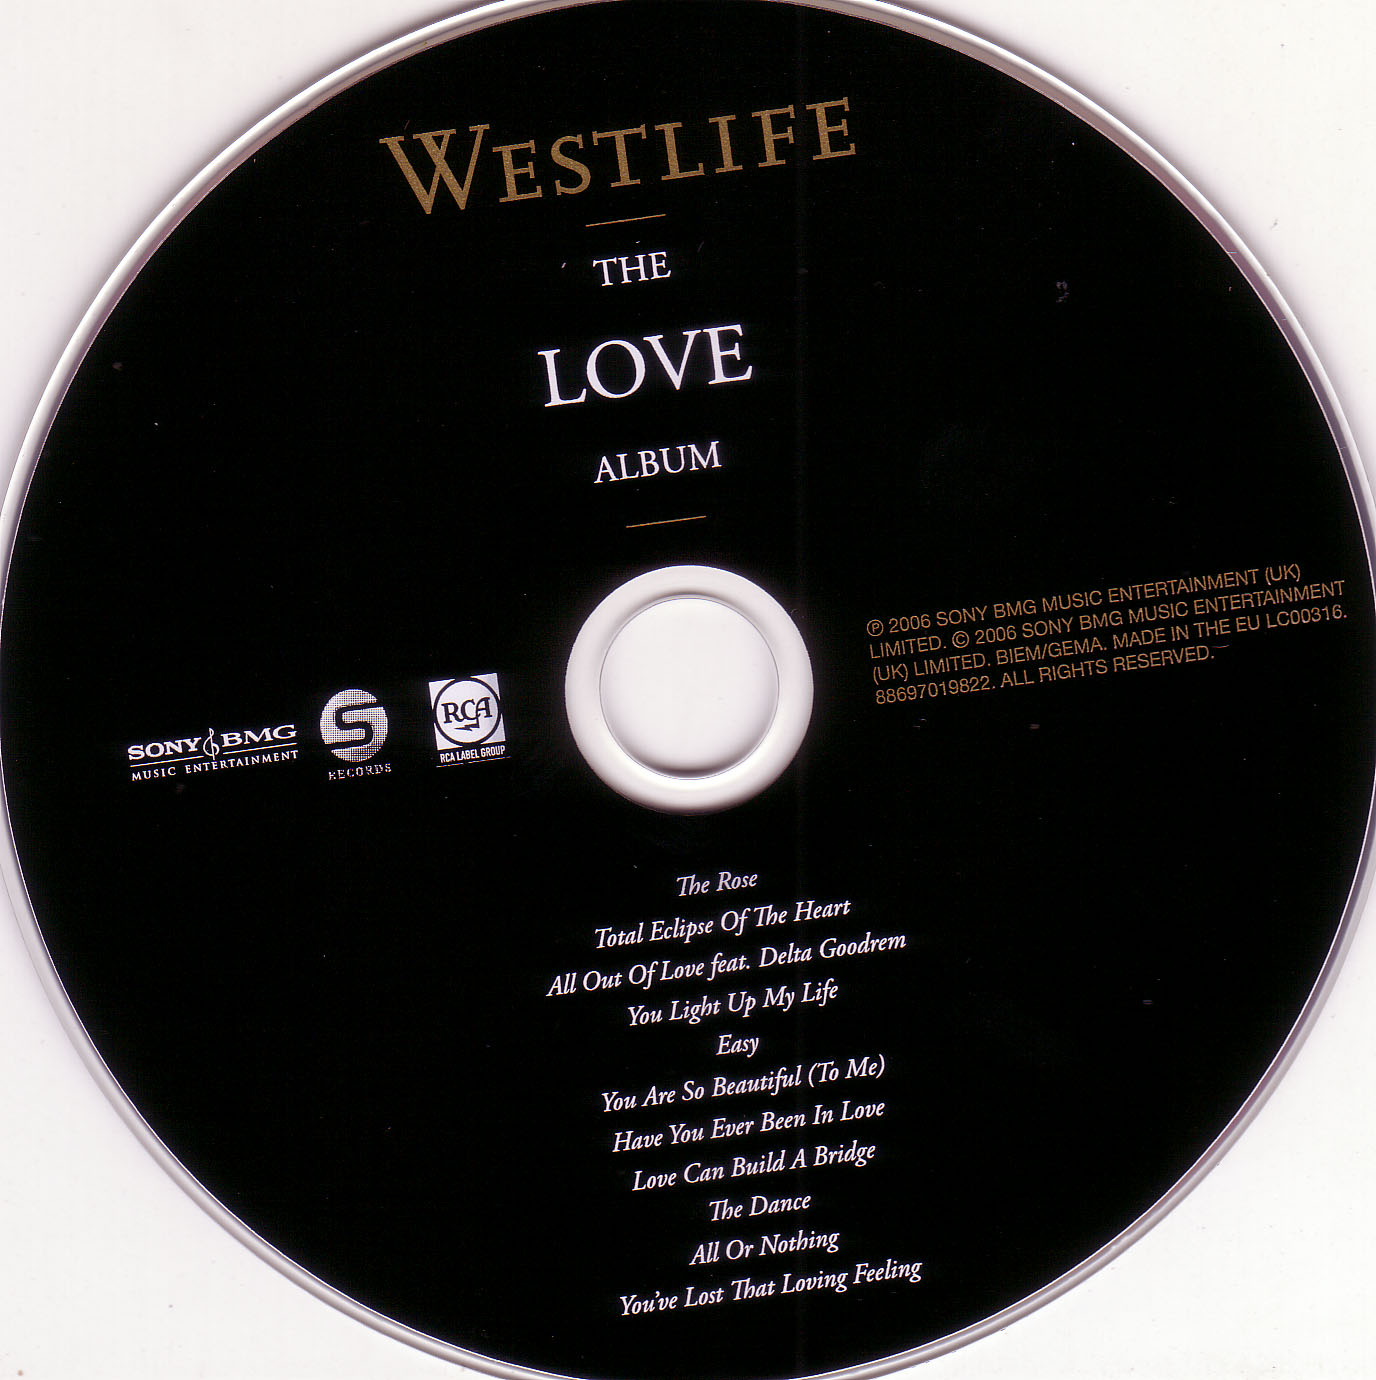 westlife album download free